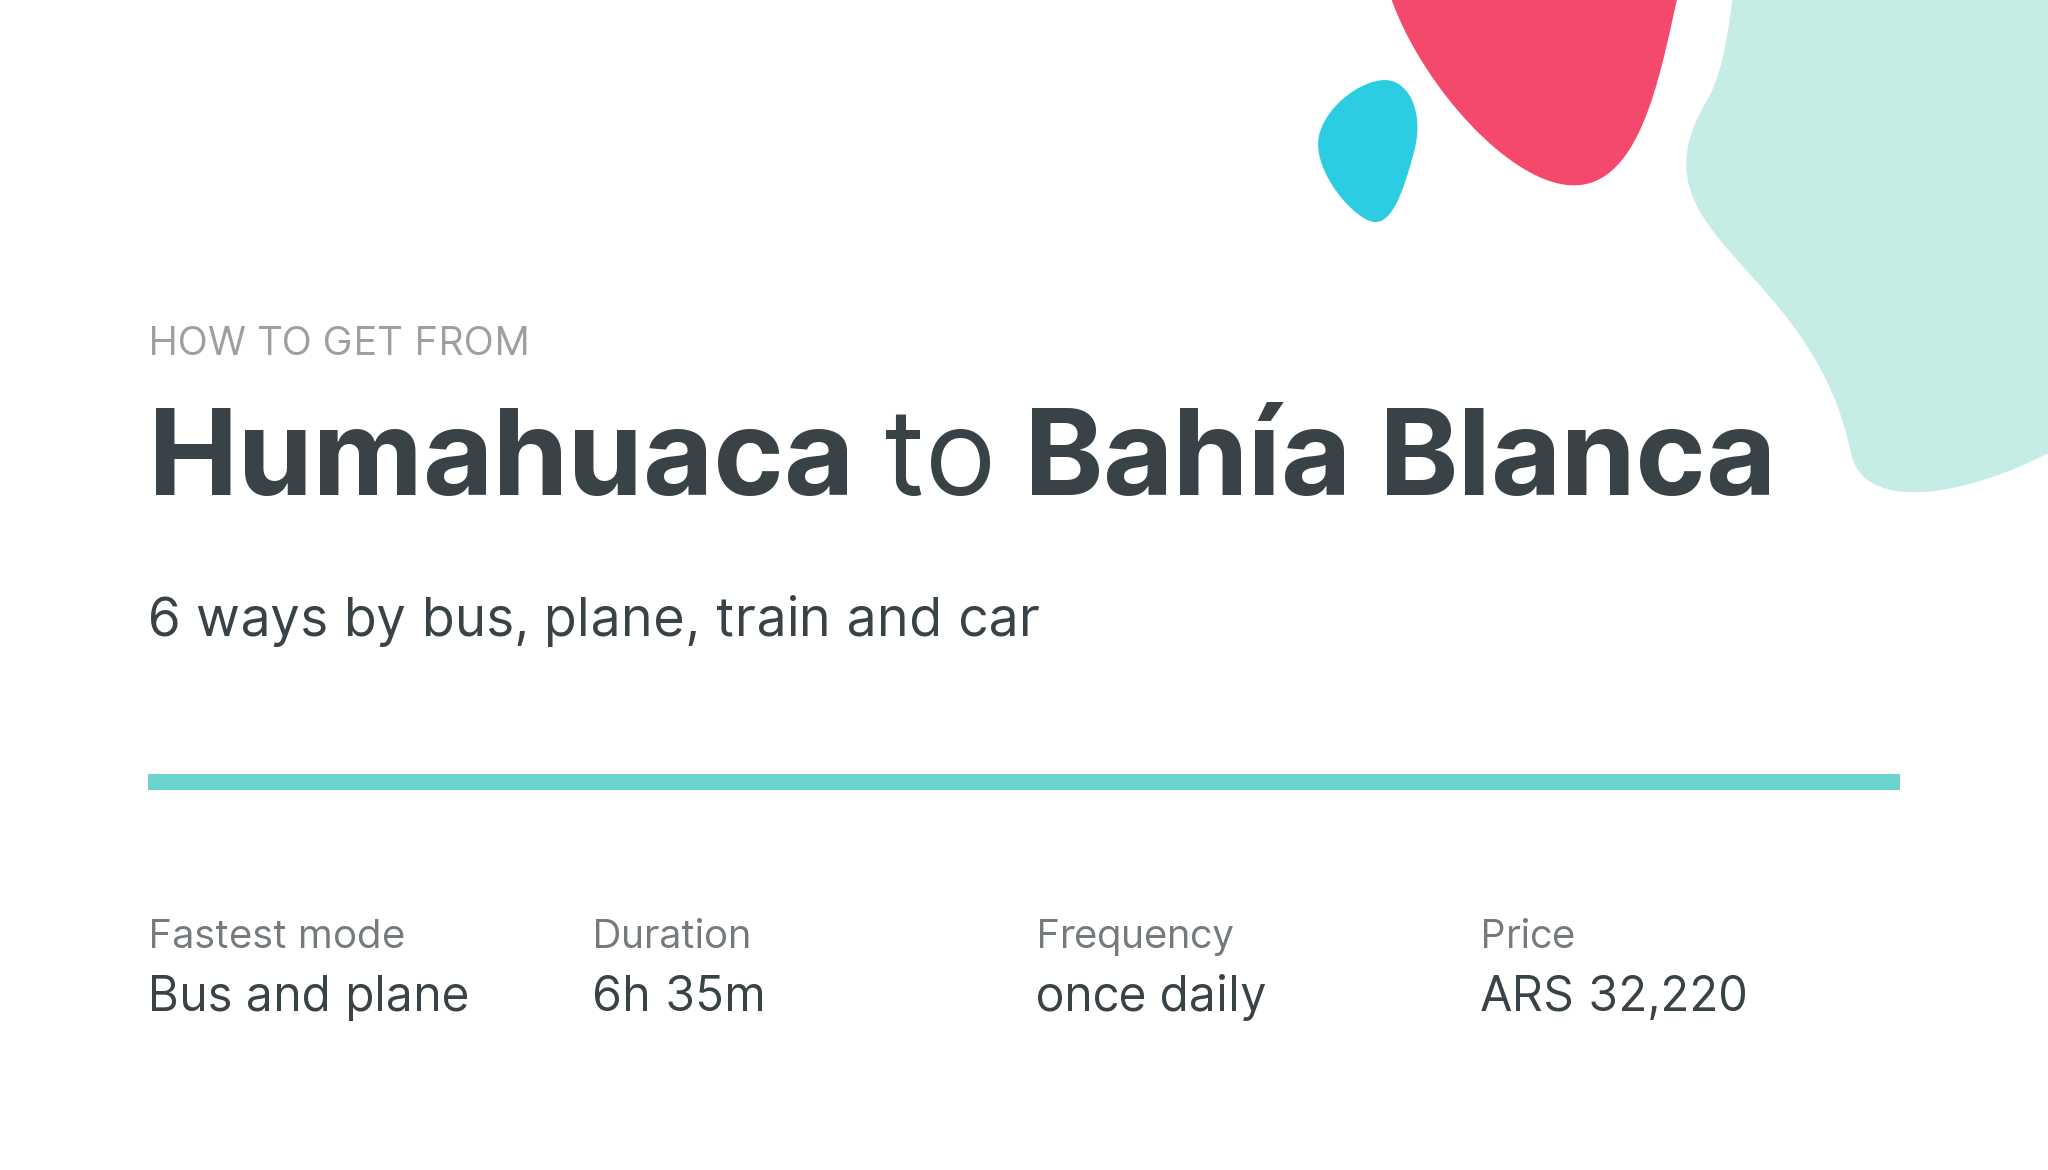 How do I get from Humahuaca to Bahía Blanca